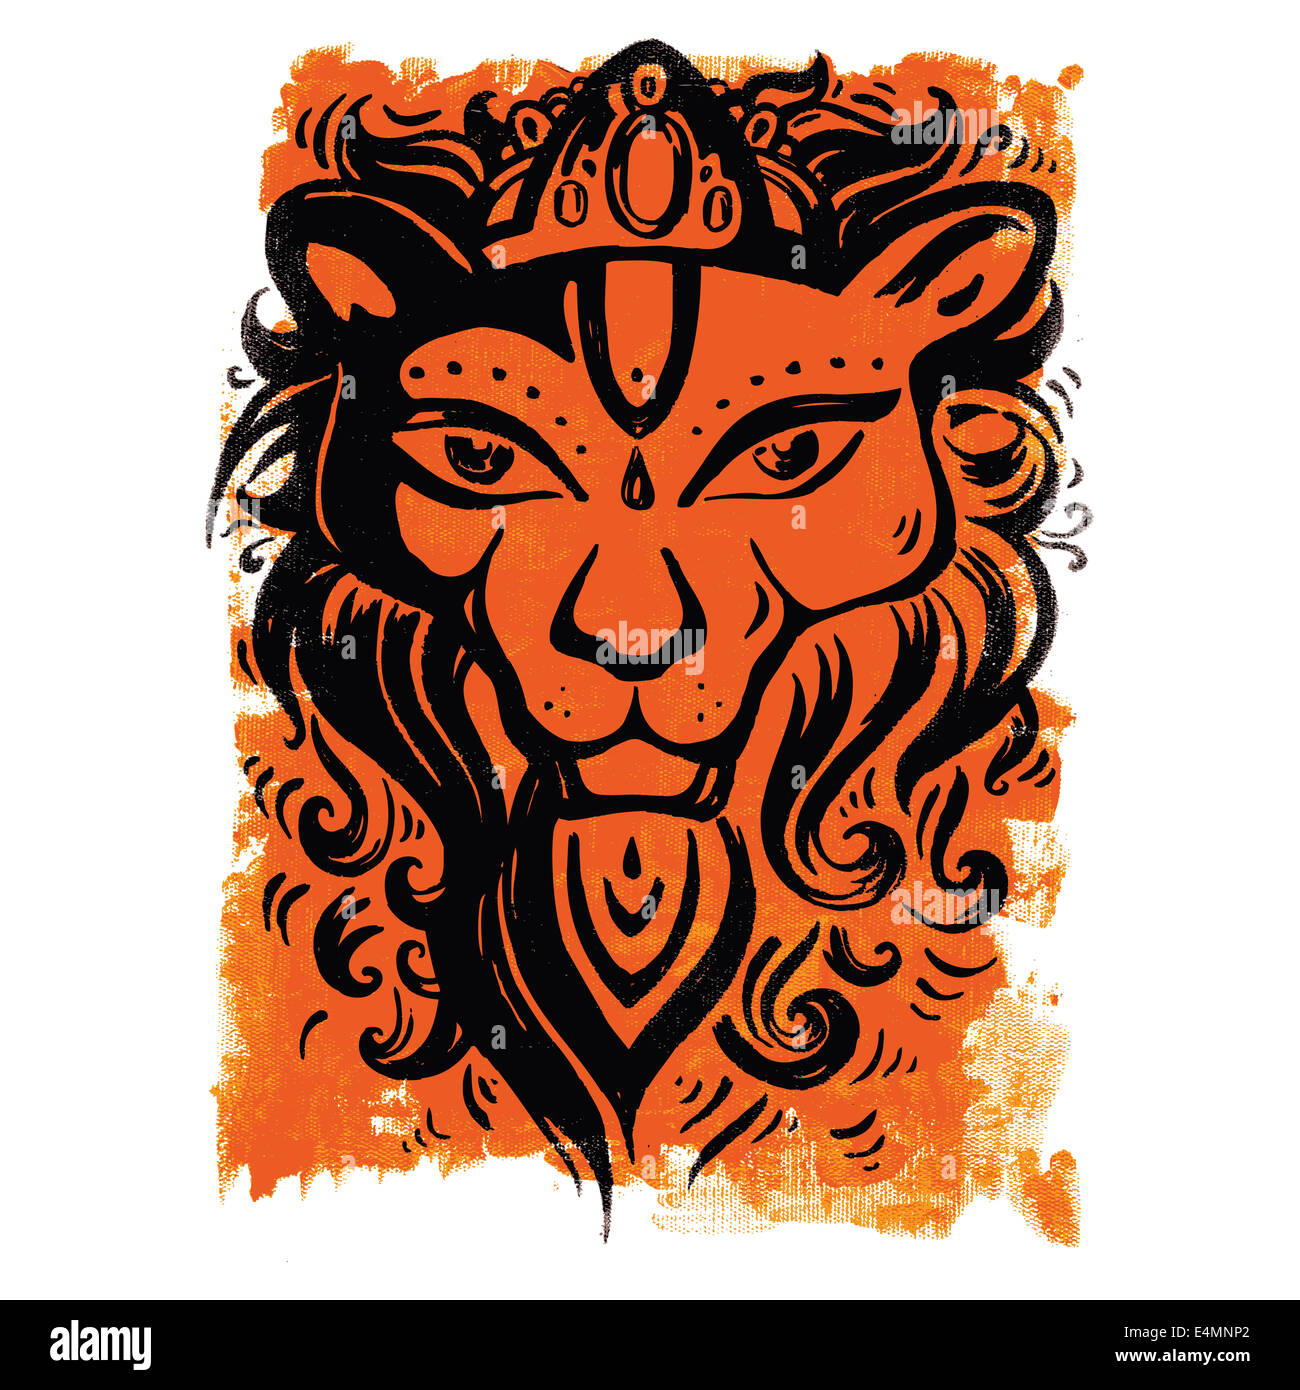 Lord Narasimha - Fourth Avatar of... - Lost Lakes Tattoo | Facebook